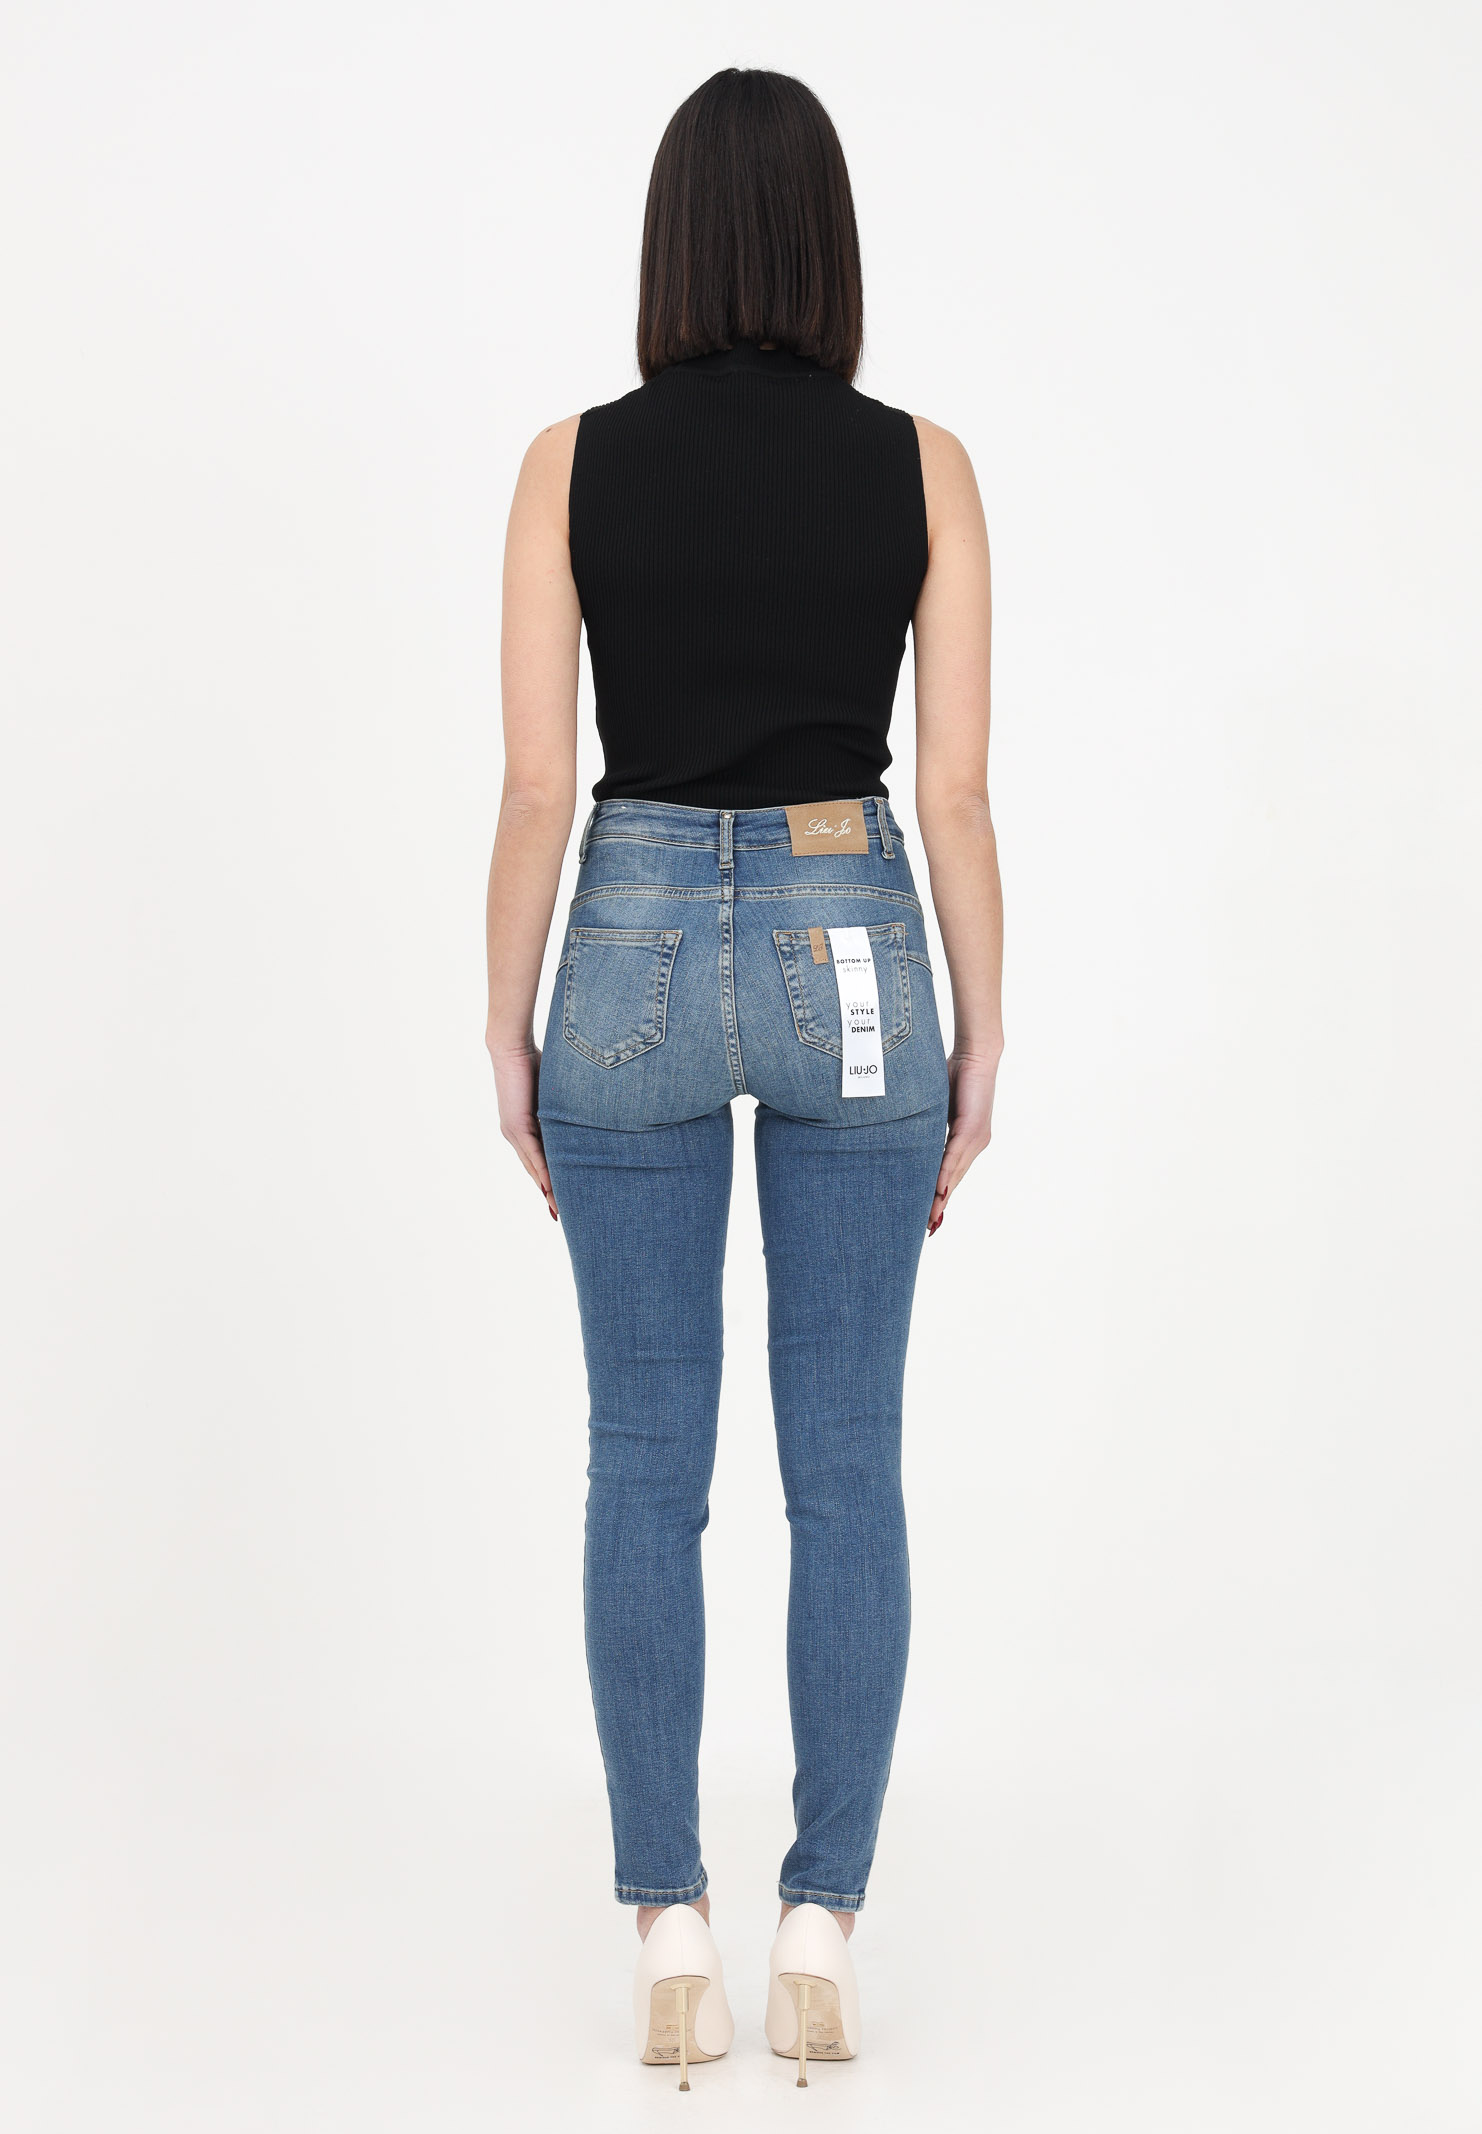 Misionero Bebida Mutuo Women's Denim Bottom Up Skinny Jeans - LIU JO - Pavidas